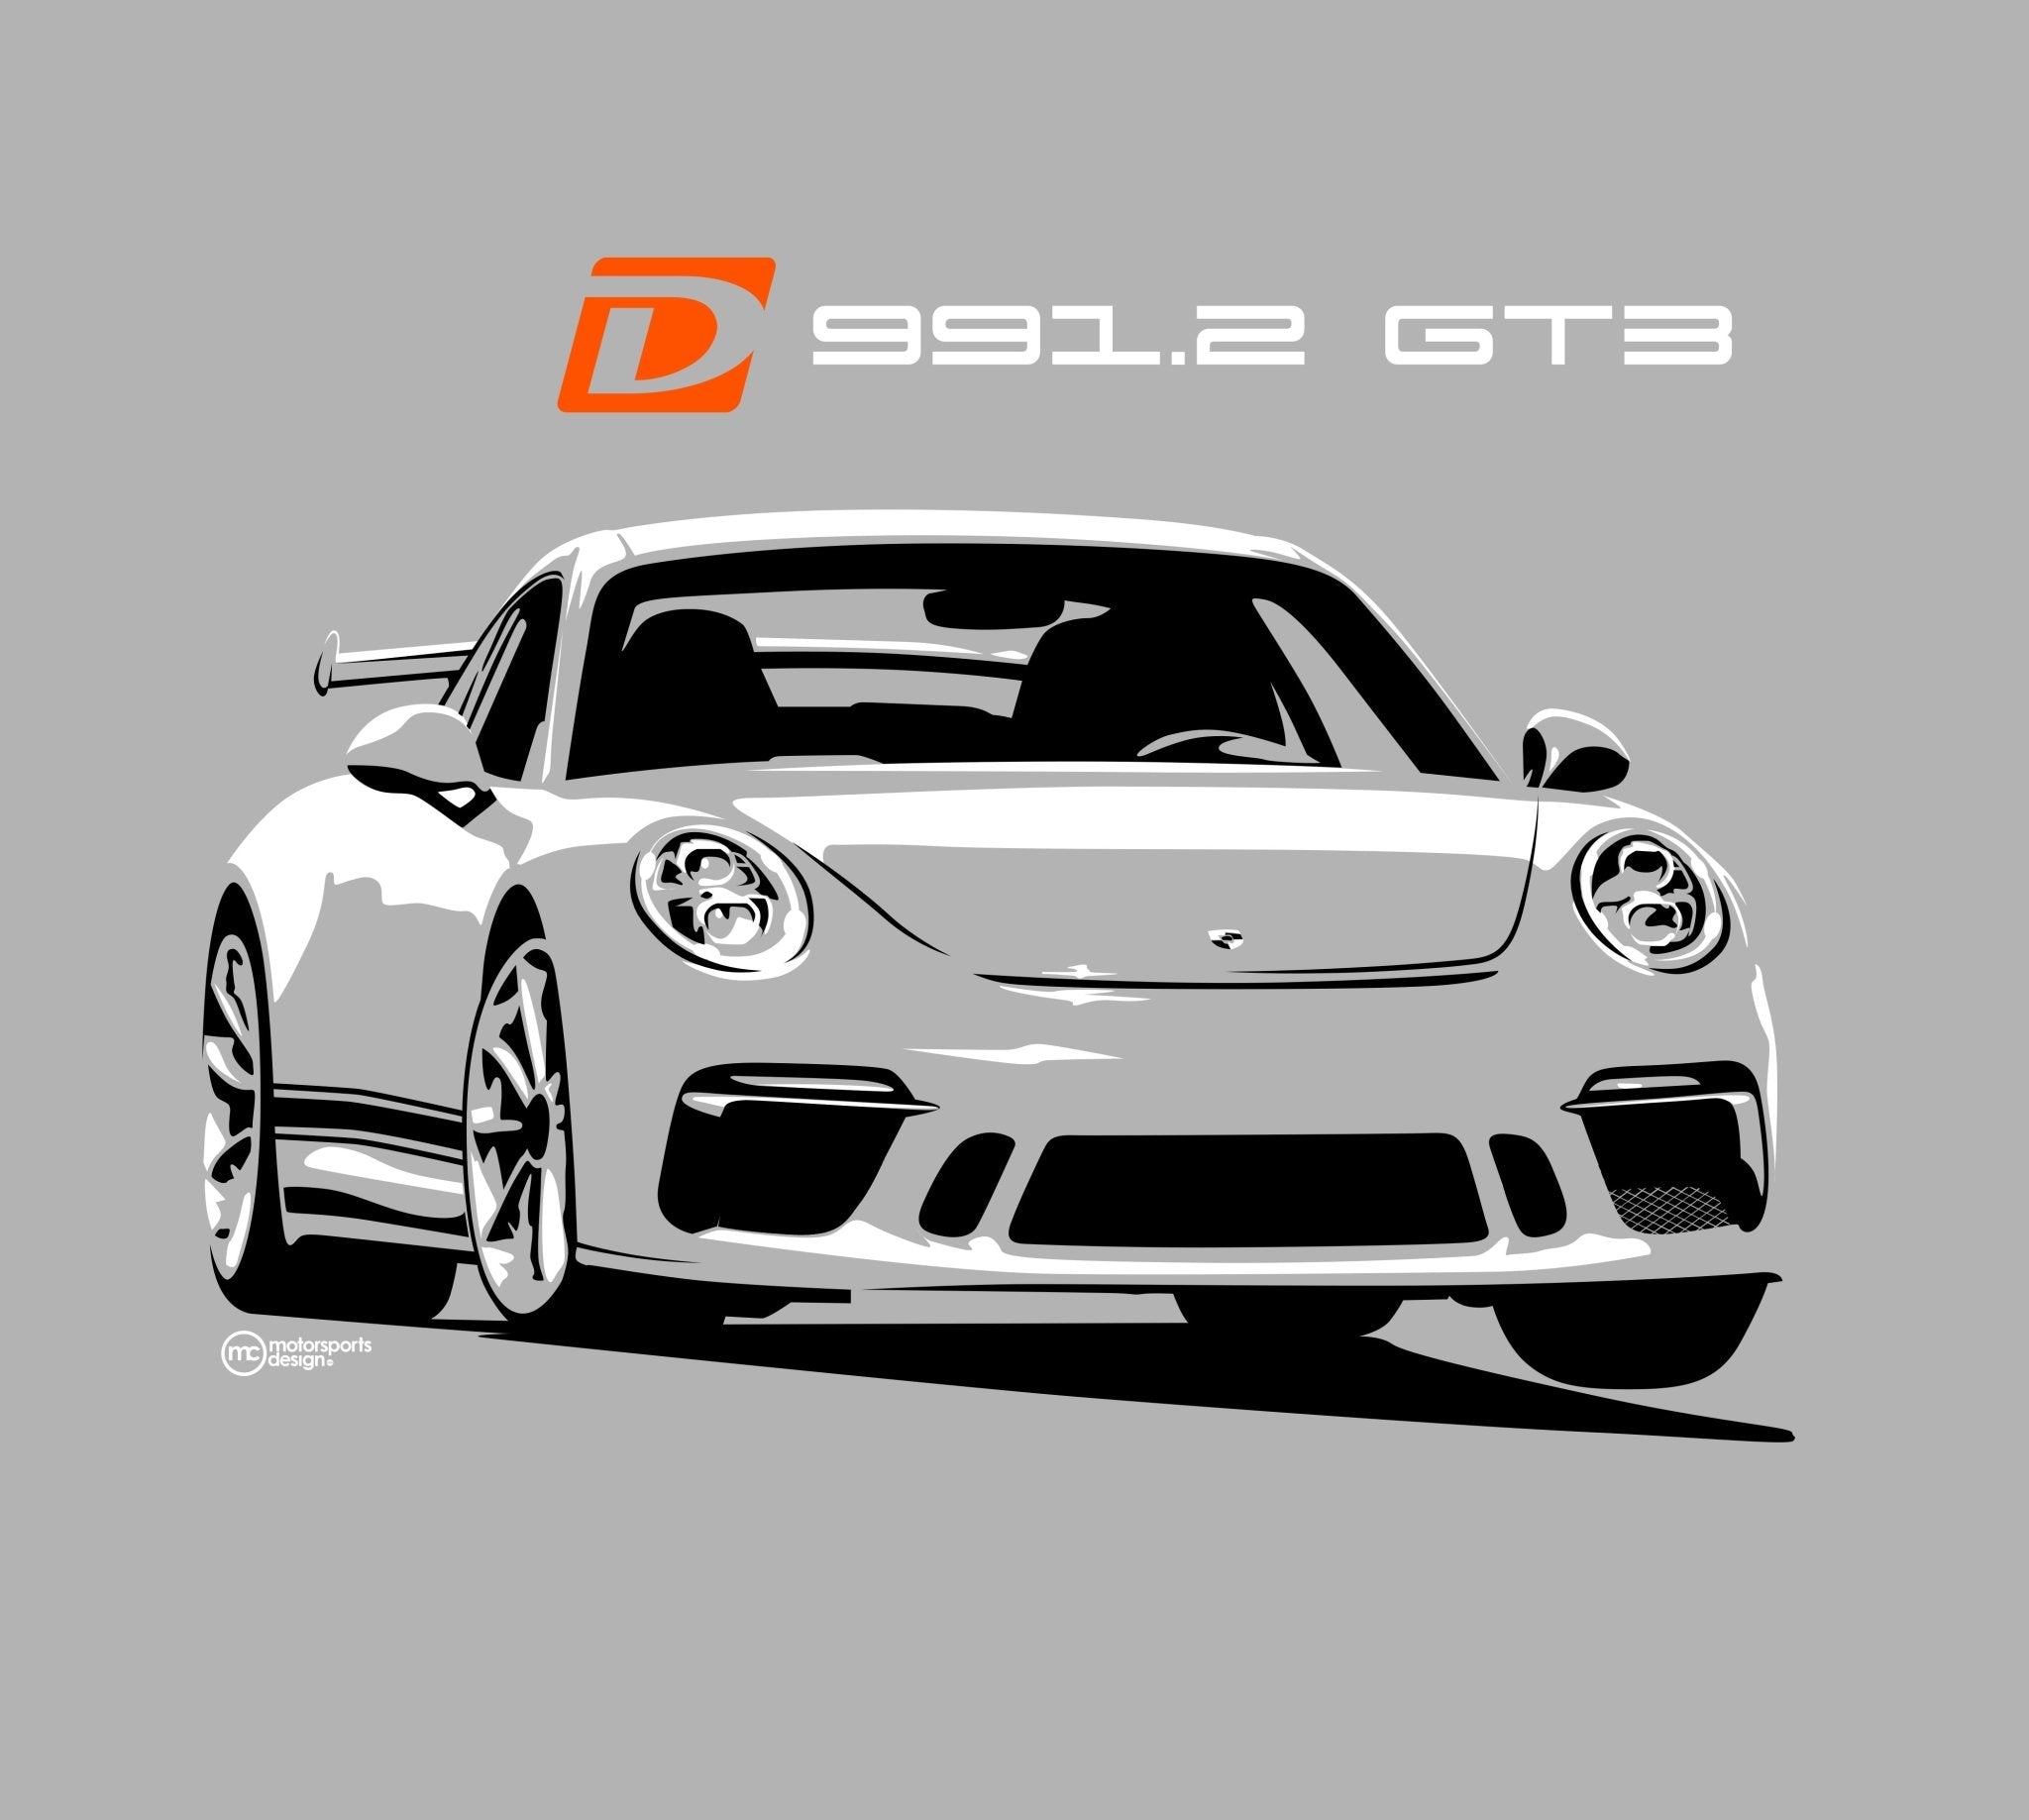 Dundon Motorsports 991.2 GT3 T-shirt - Dundon Motorsports